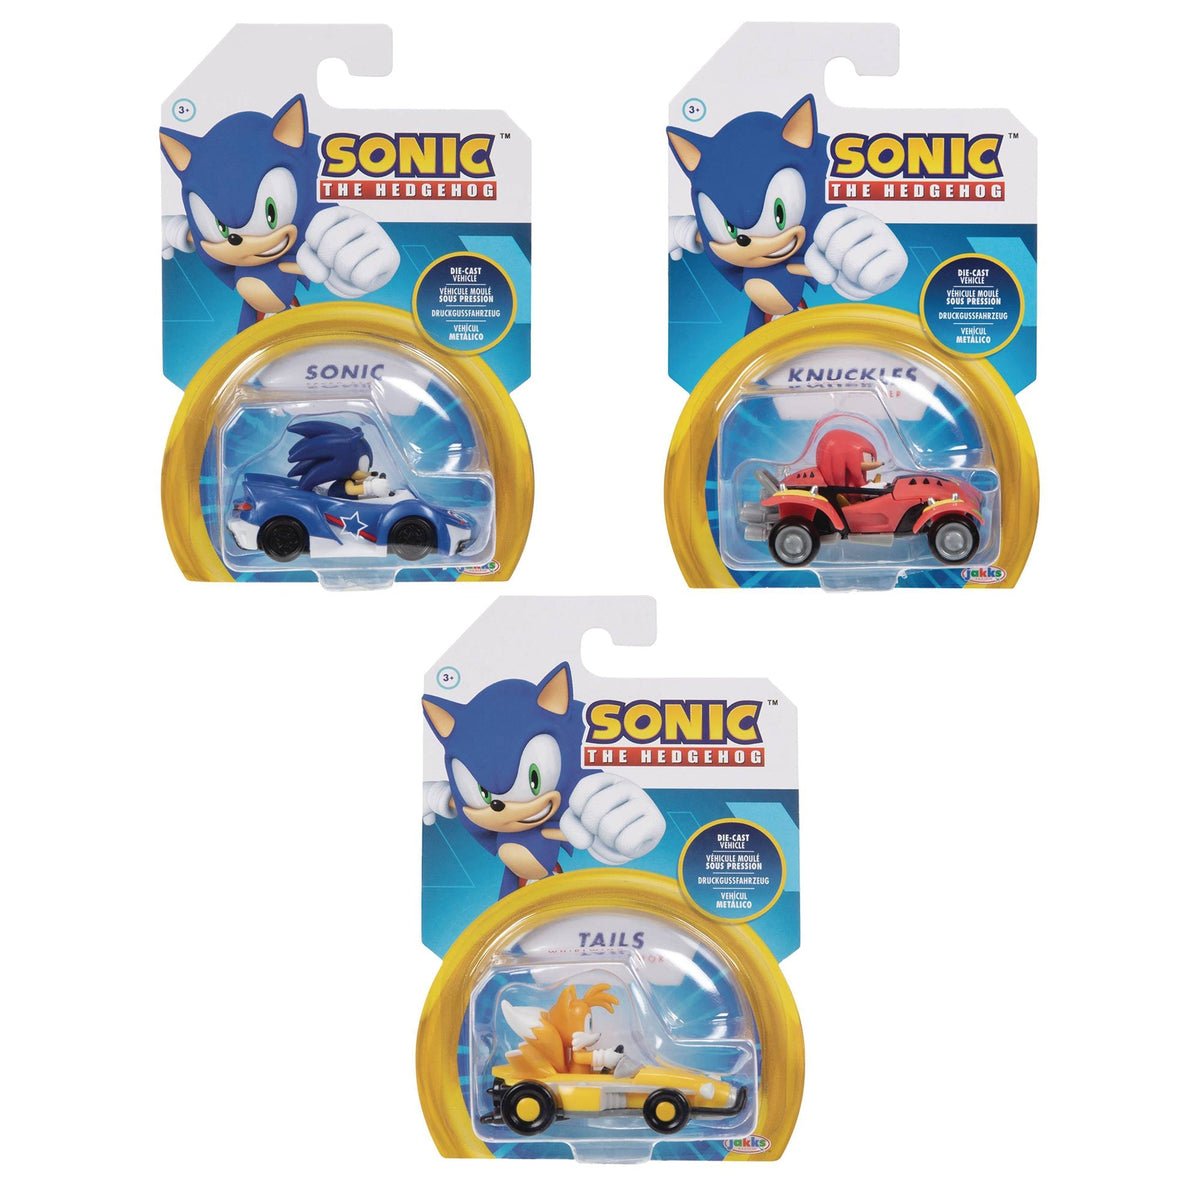 U.P.D. INC Toys & Games Sonic the Hedgehog Die-Cast Vehicle, Assortment, 1 Count